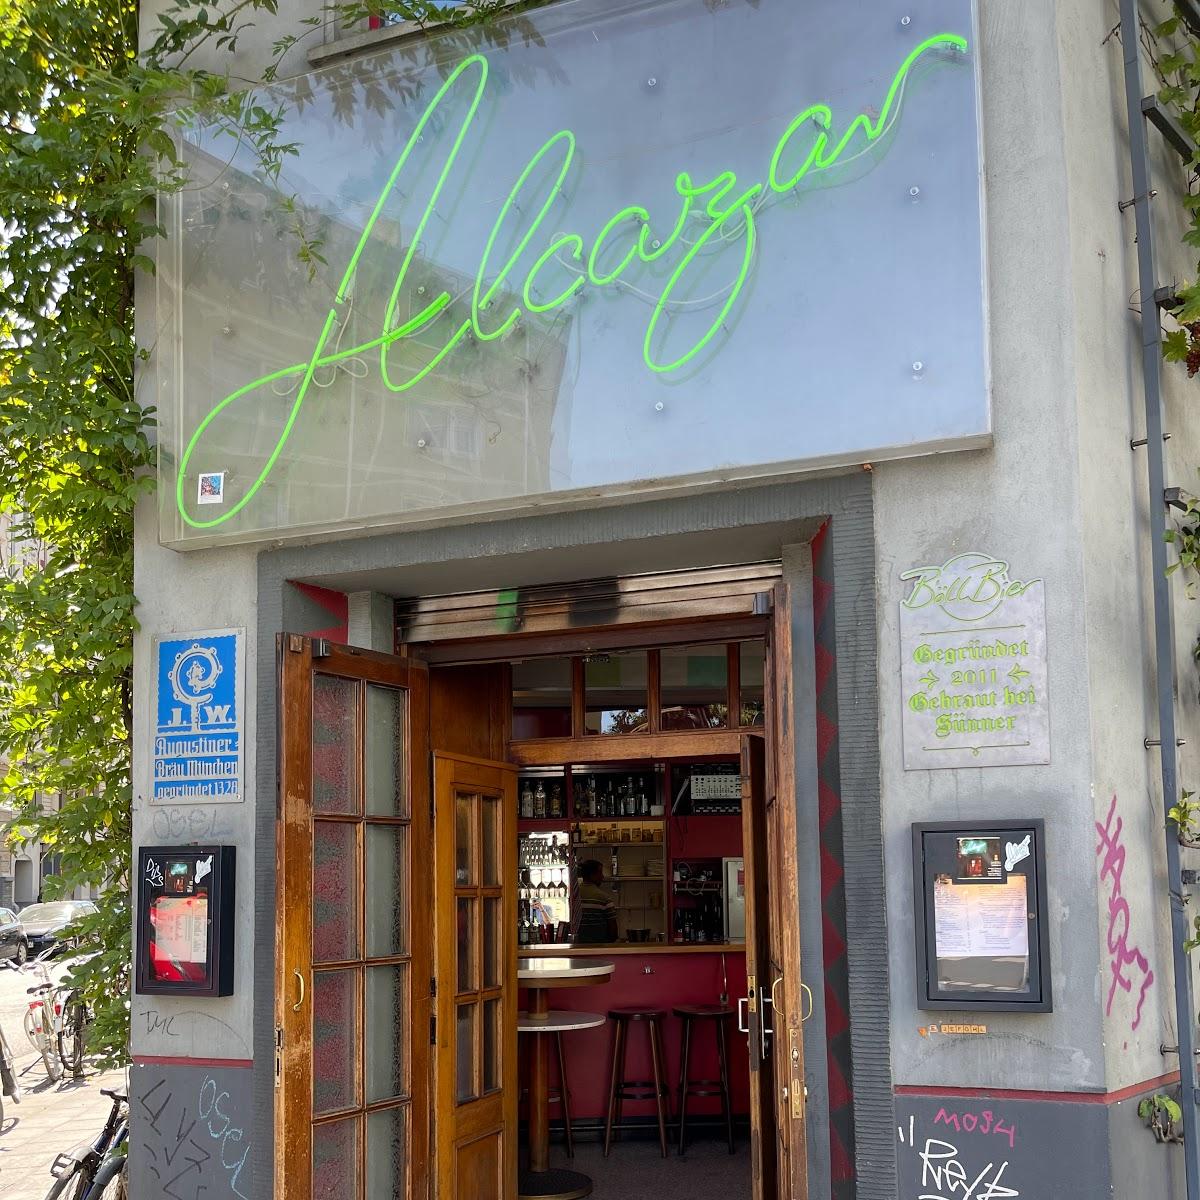 Restaurant "Alcazar" in Köln